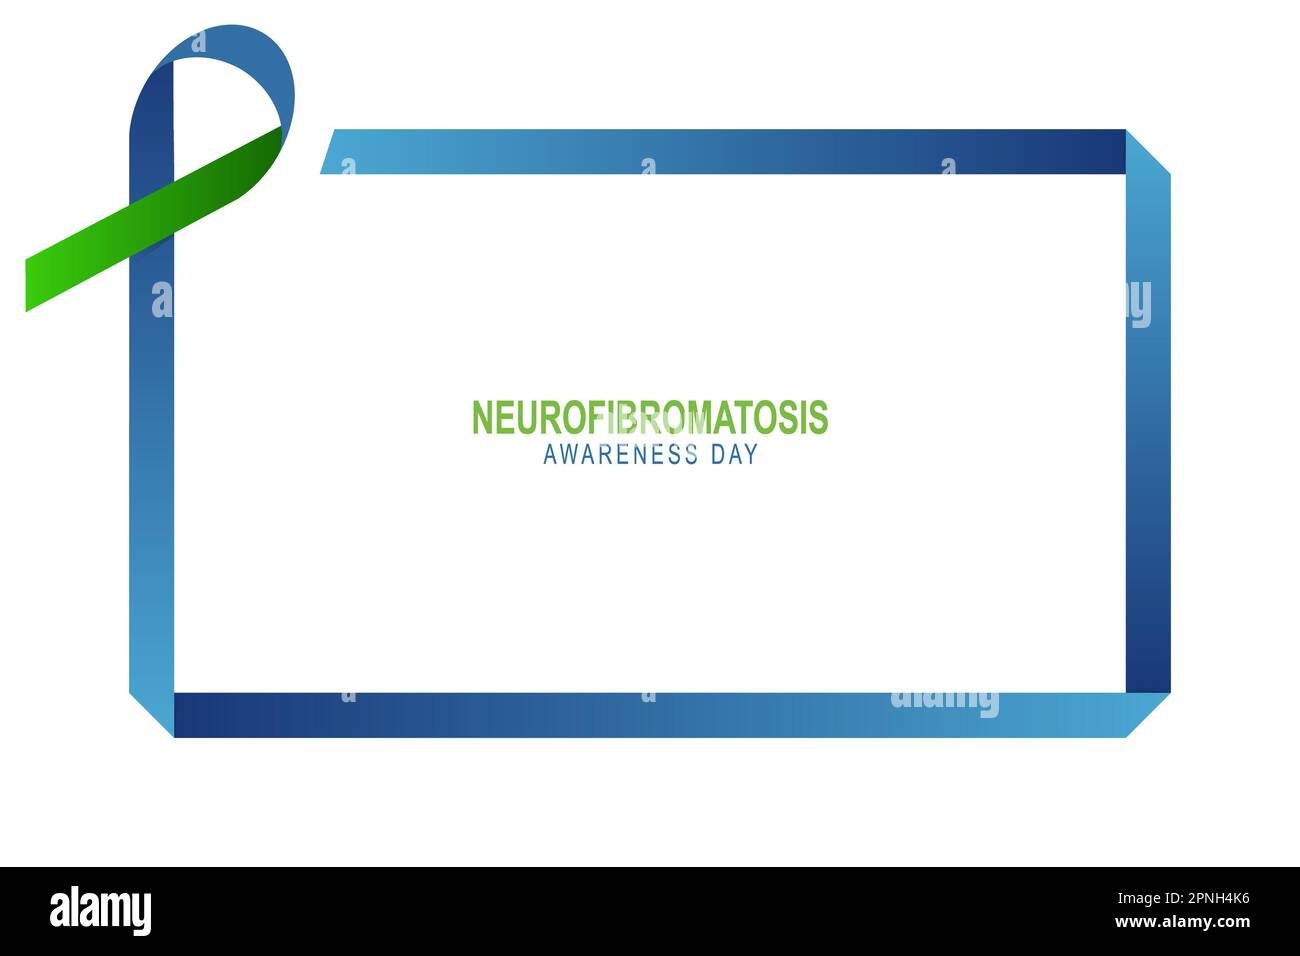 Neurofibromatosis Awareness Day background. Health, Awareness. Vector illustration. Stock Photo